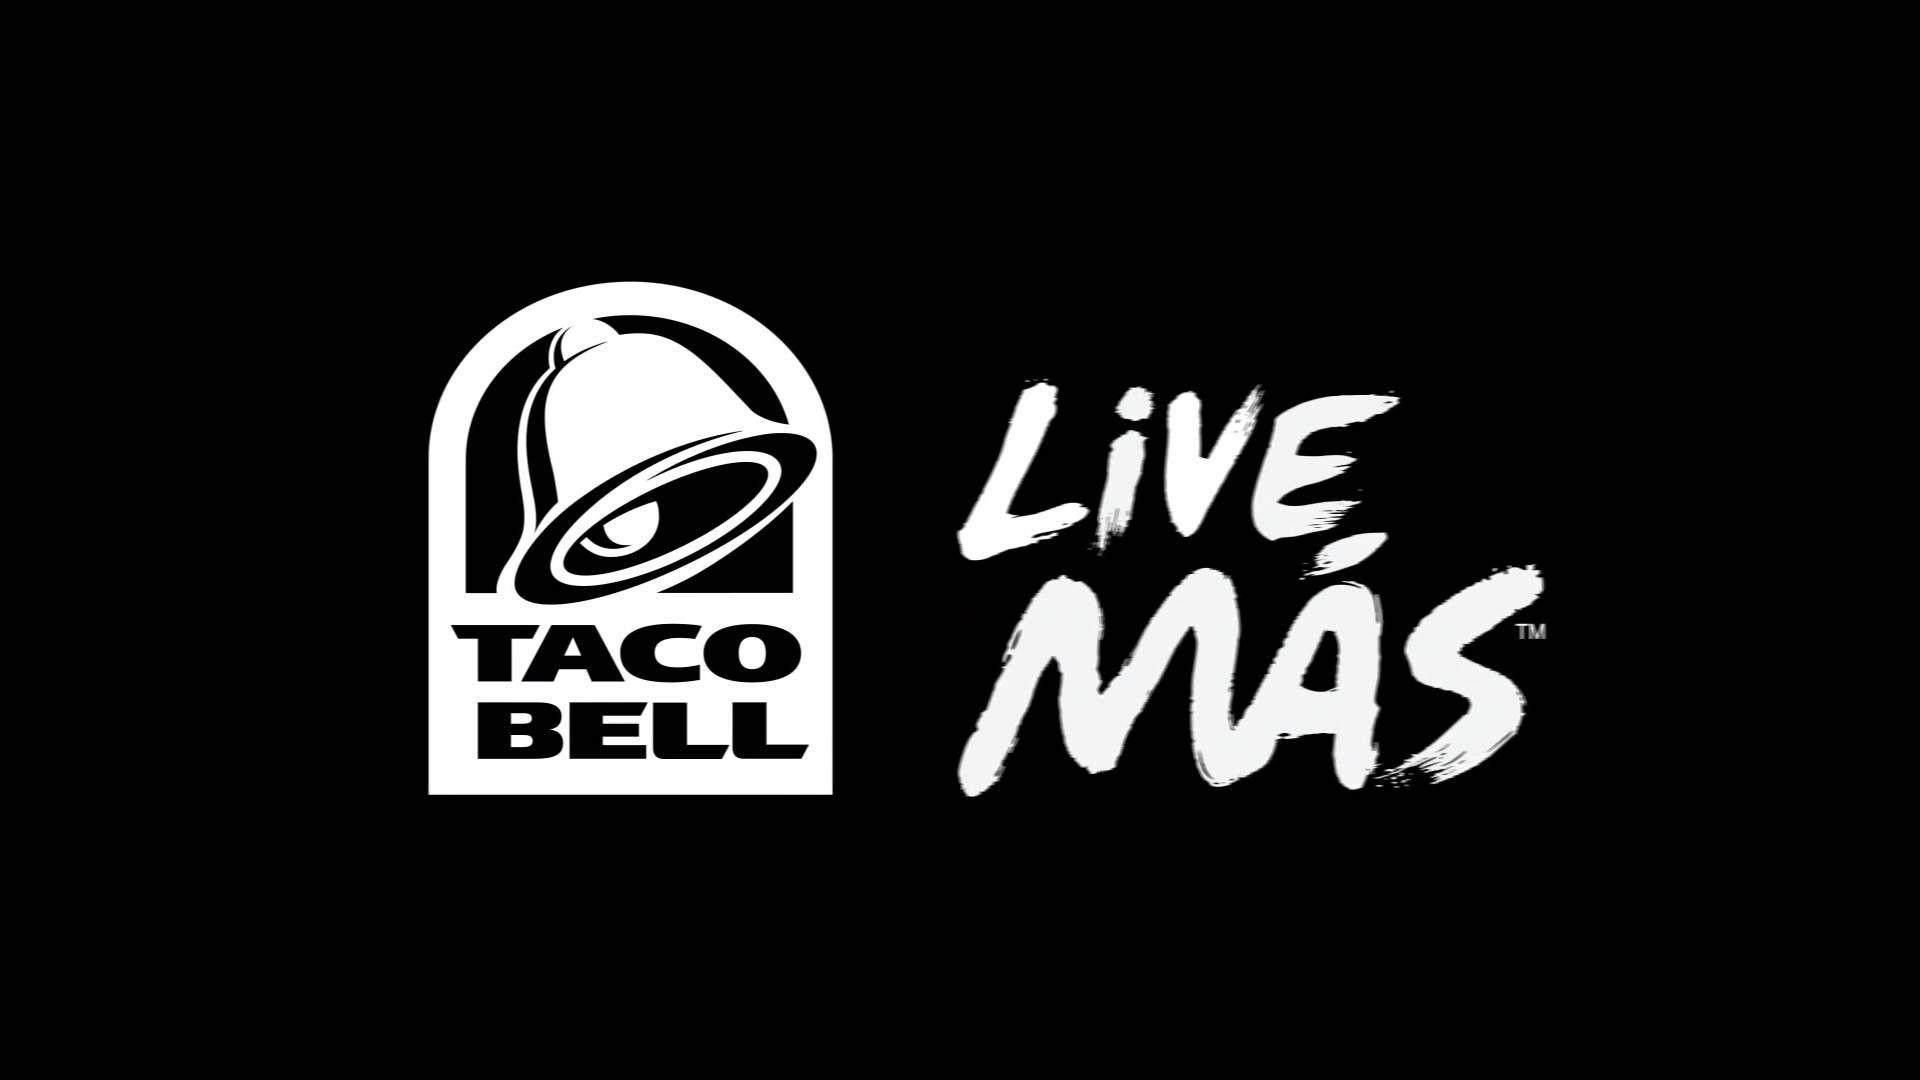 Taco Bell Live Mas Logo Wallpaper 62672 1920x1080 px